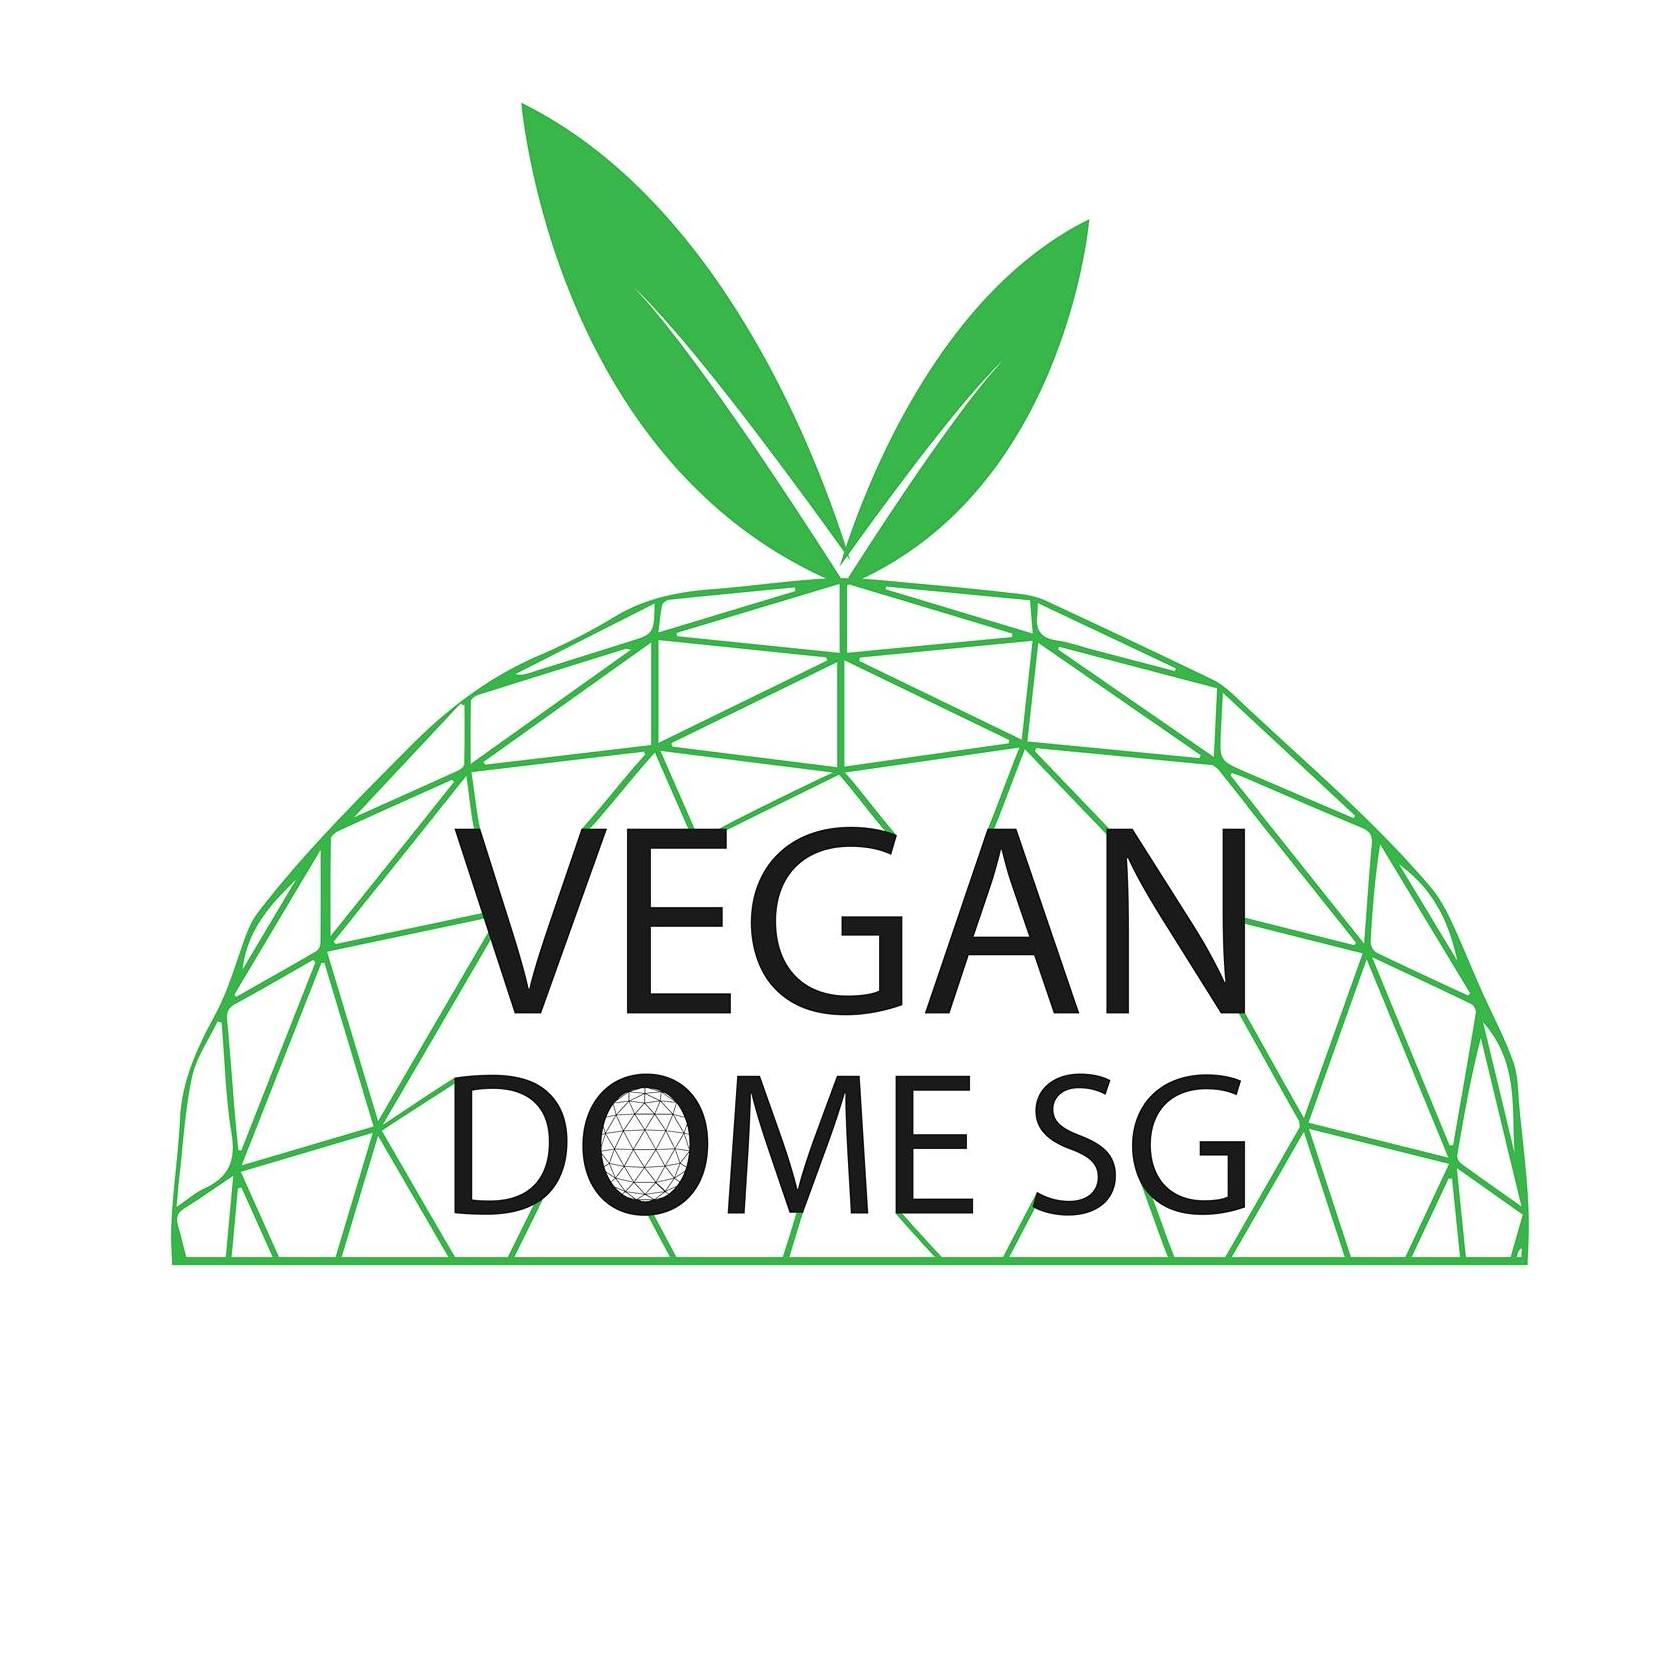 Vegan Dome sg logo